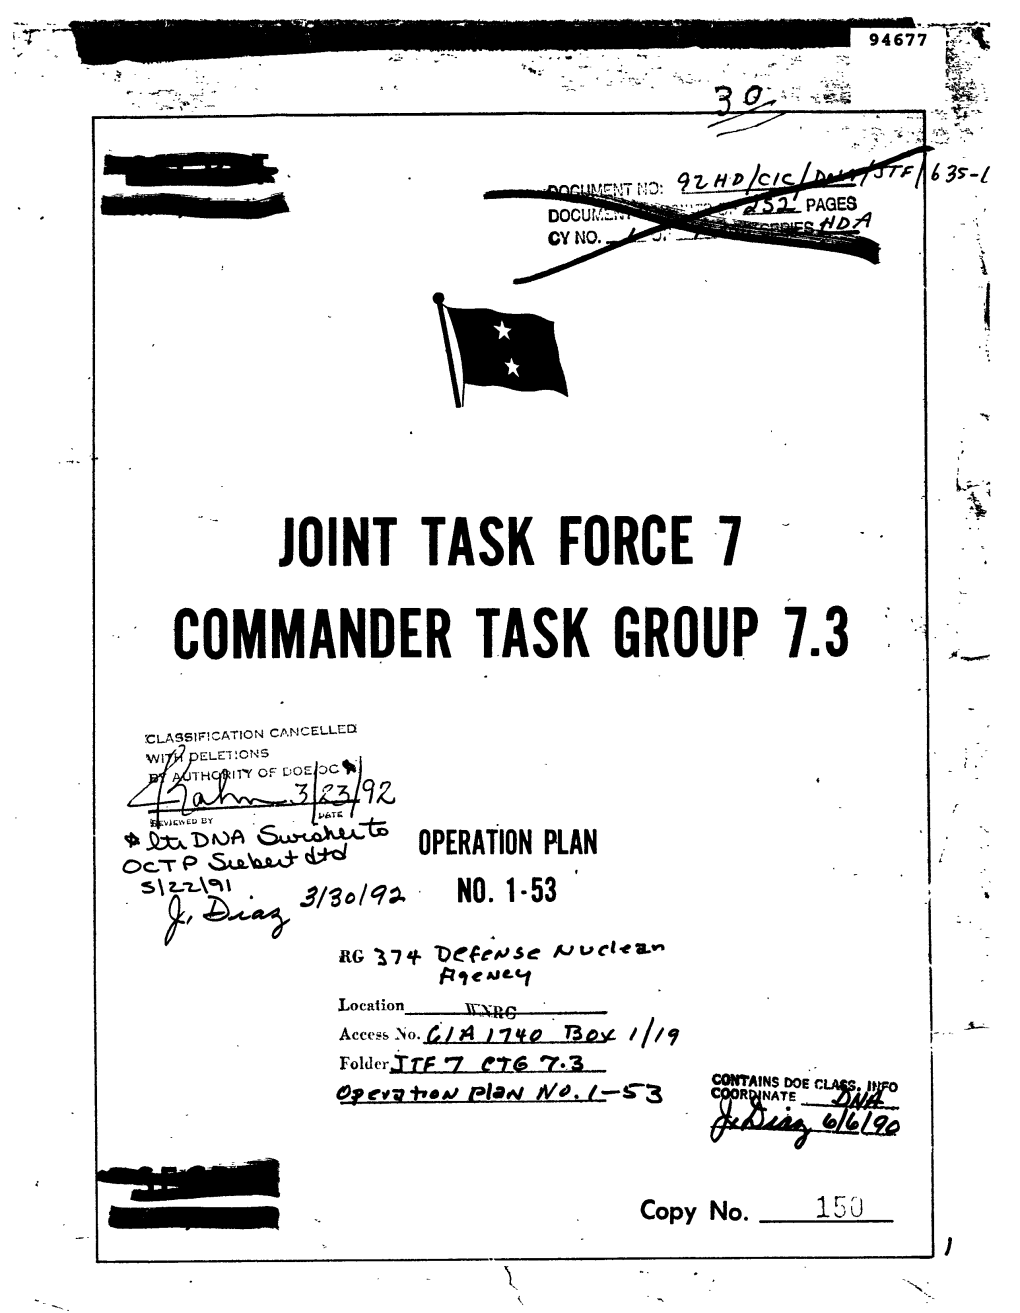 Joint Task Force 7, Commander Task